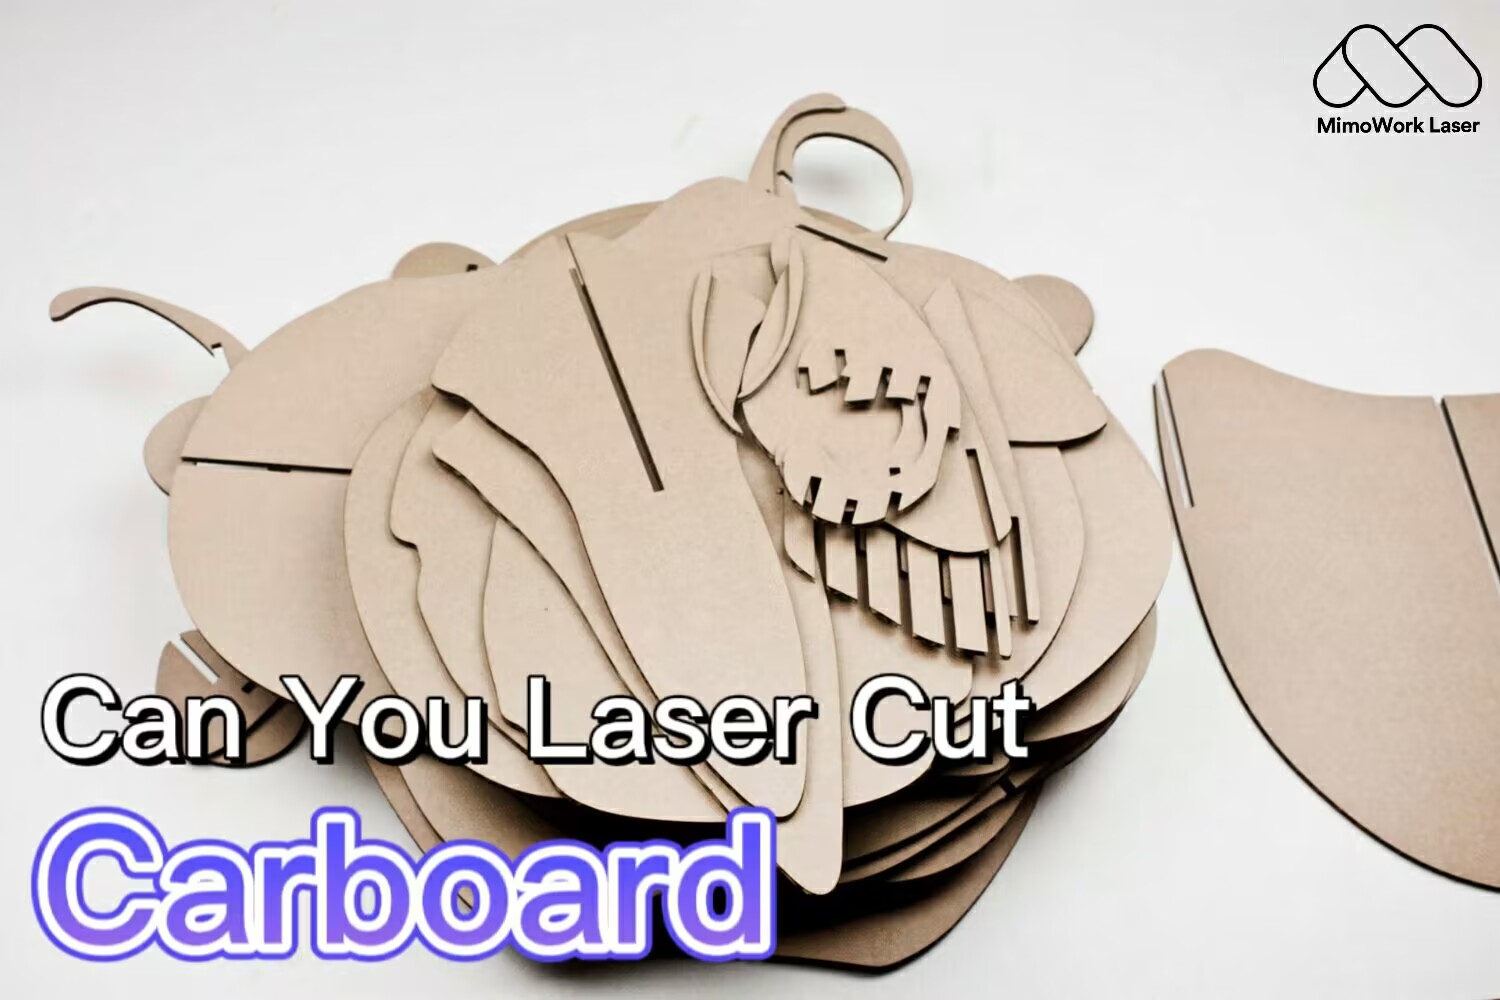 Can you laser cut cardboard?